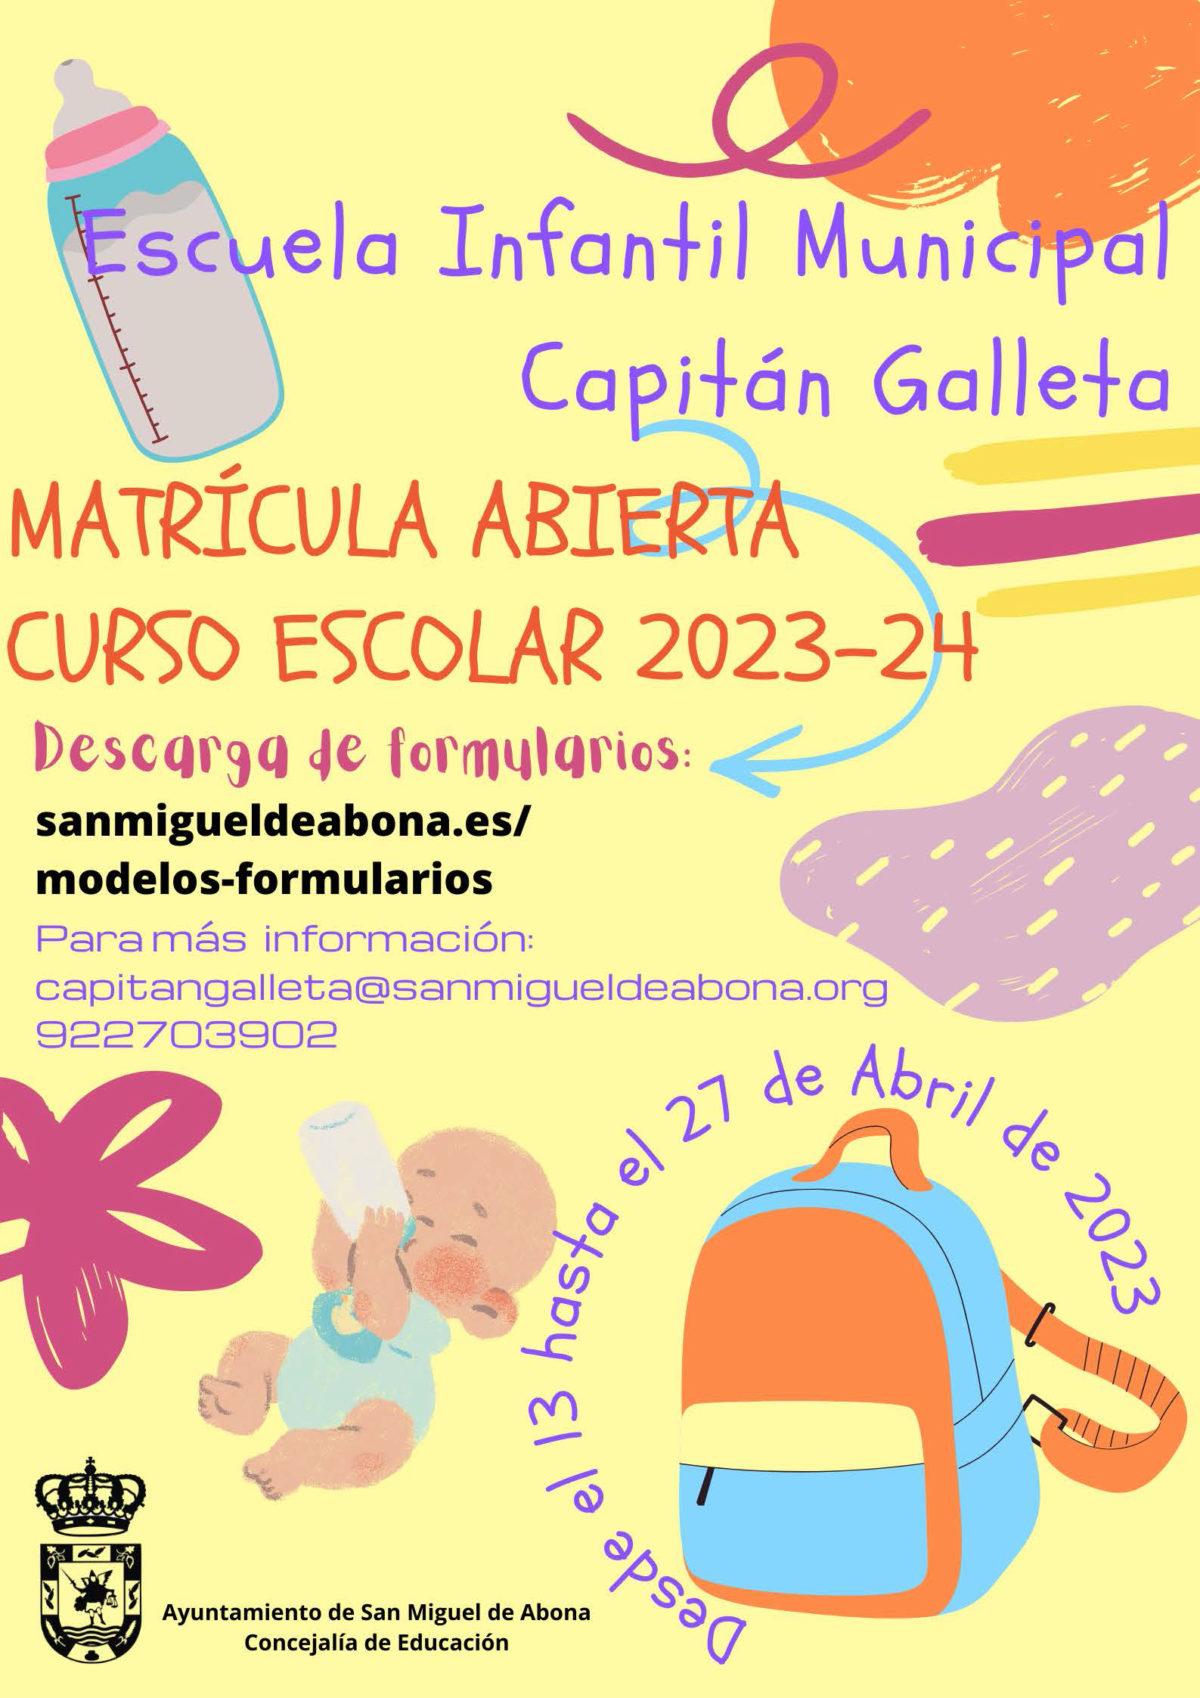 Se abre el plazo de matrícula para el curso 2023-2024 de la Escuela Infantil Municipal Capitán Galleta